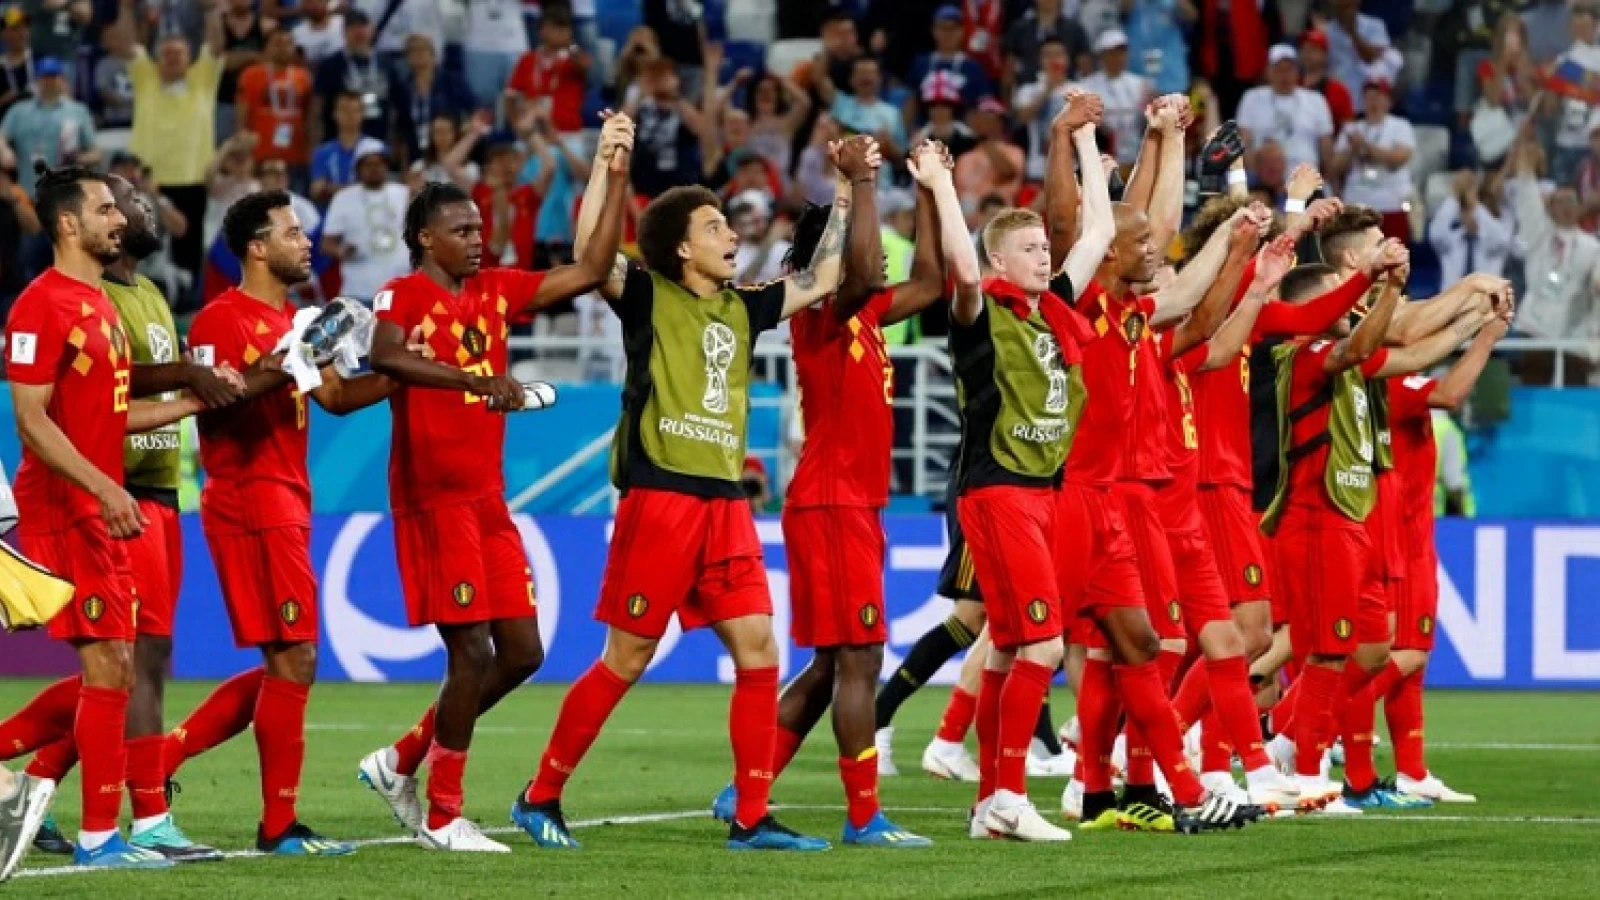 KANTINE | Dag 19 WK 2018 | België na spannend duel door